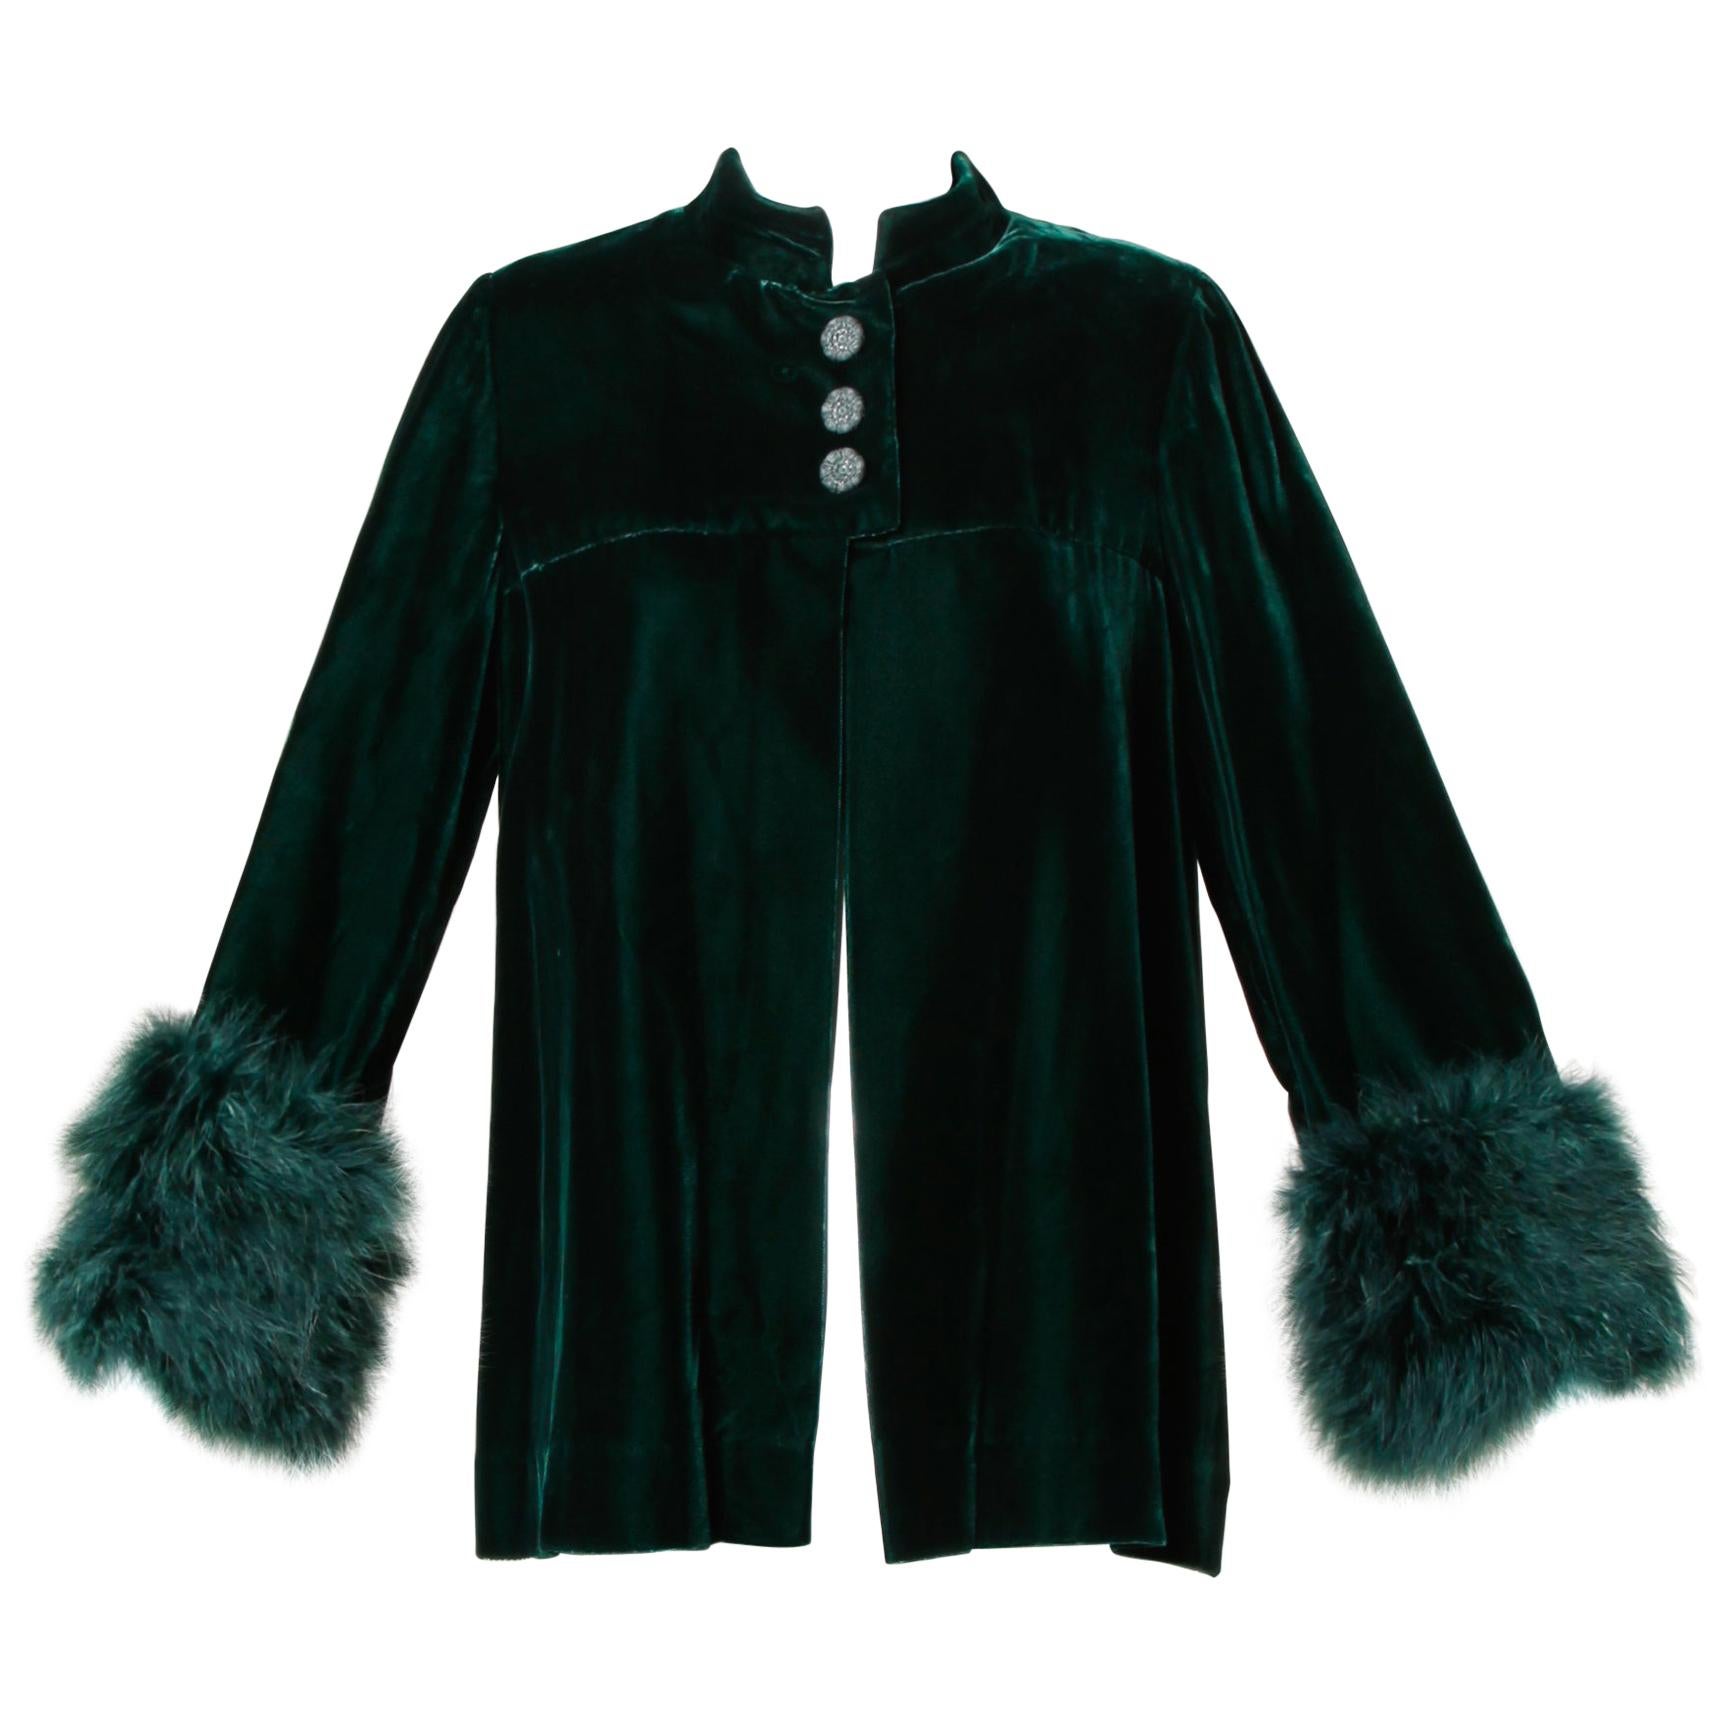 1970s Lilli Diamond Vintage Green Velvet Jacket with Feather Cuffs